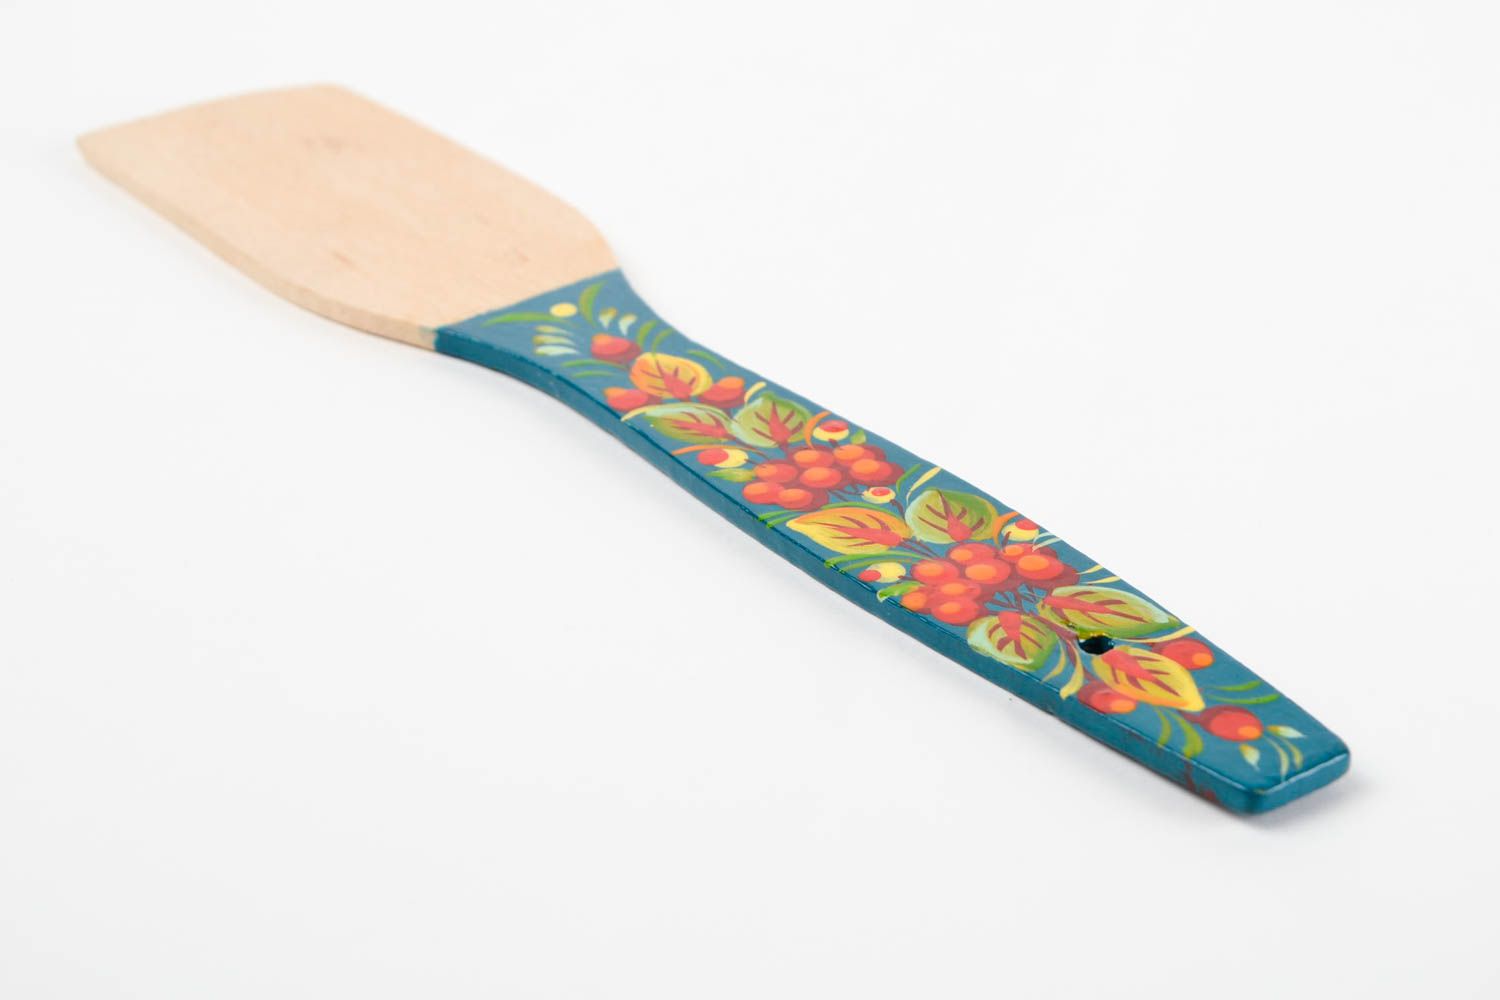 Handmade spatula designer litchen utensils decor ideas wooden spatula  photo 4